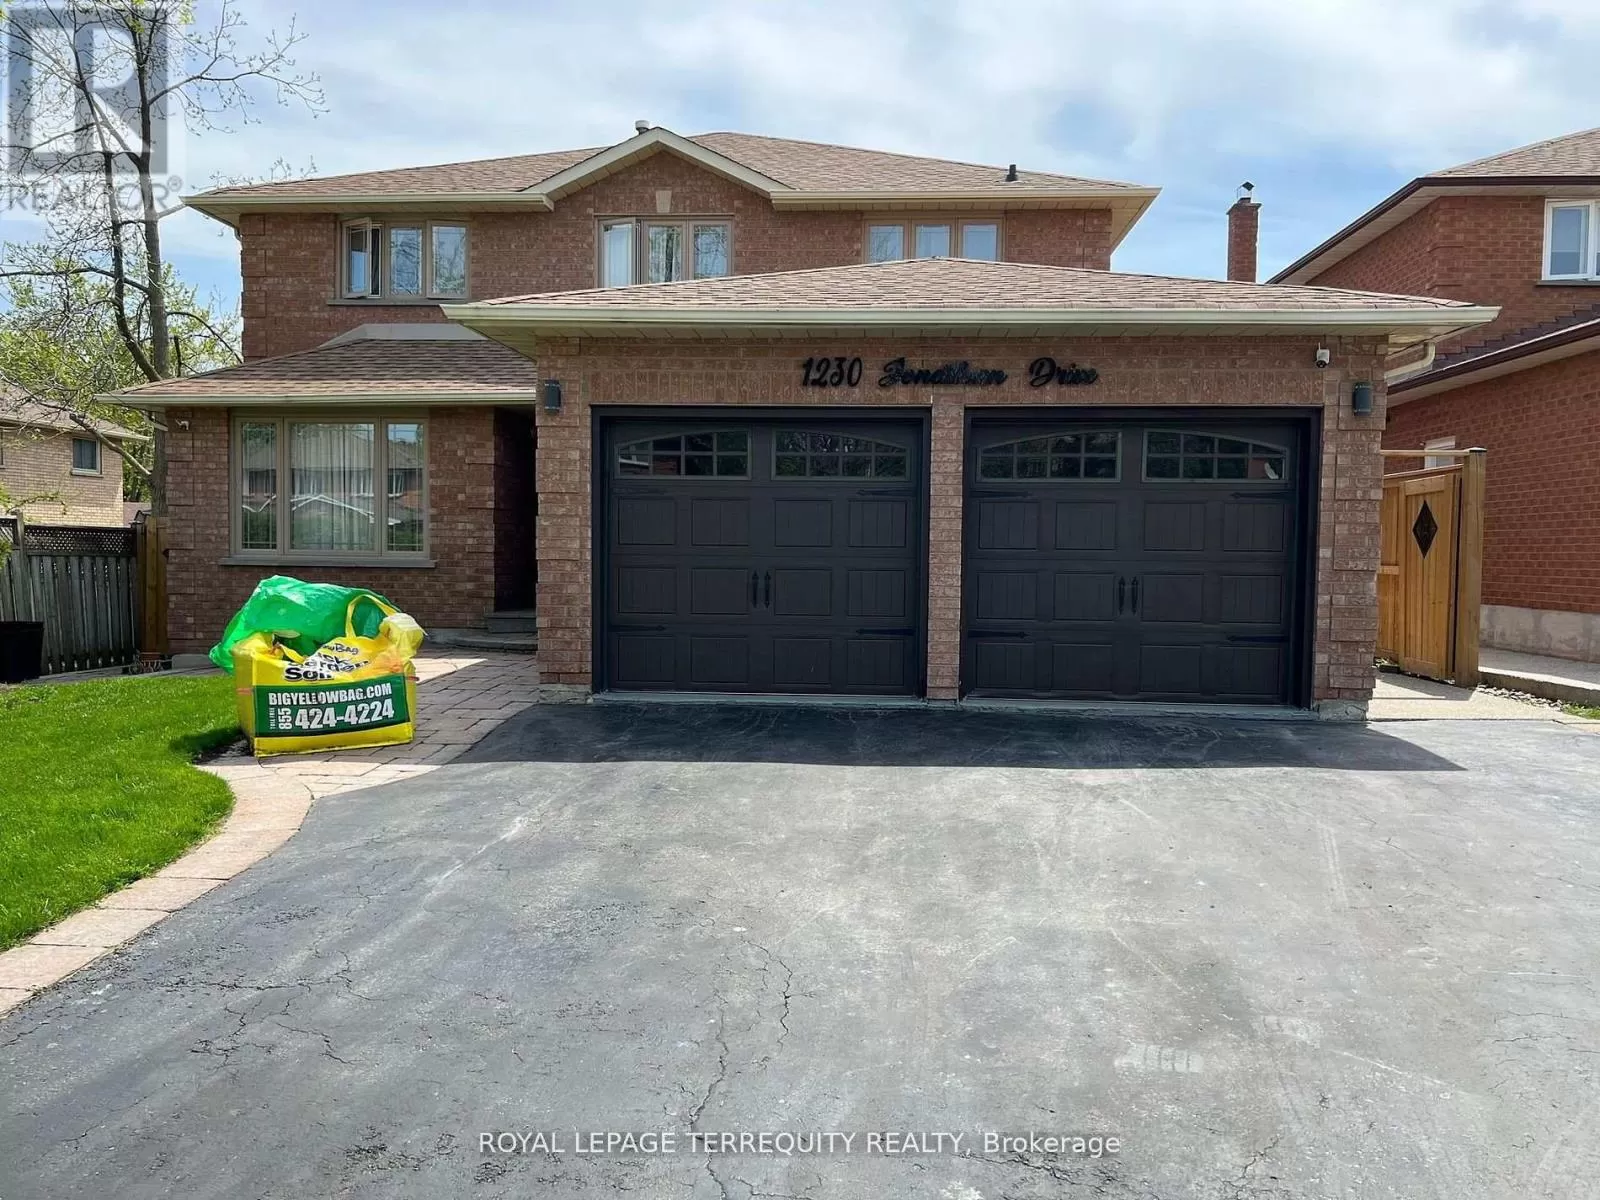 House for rent: Bsmt - 1230 Jonathan Drive, Oakville, Ontario L6J 7H2